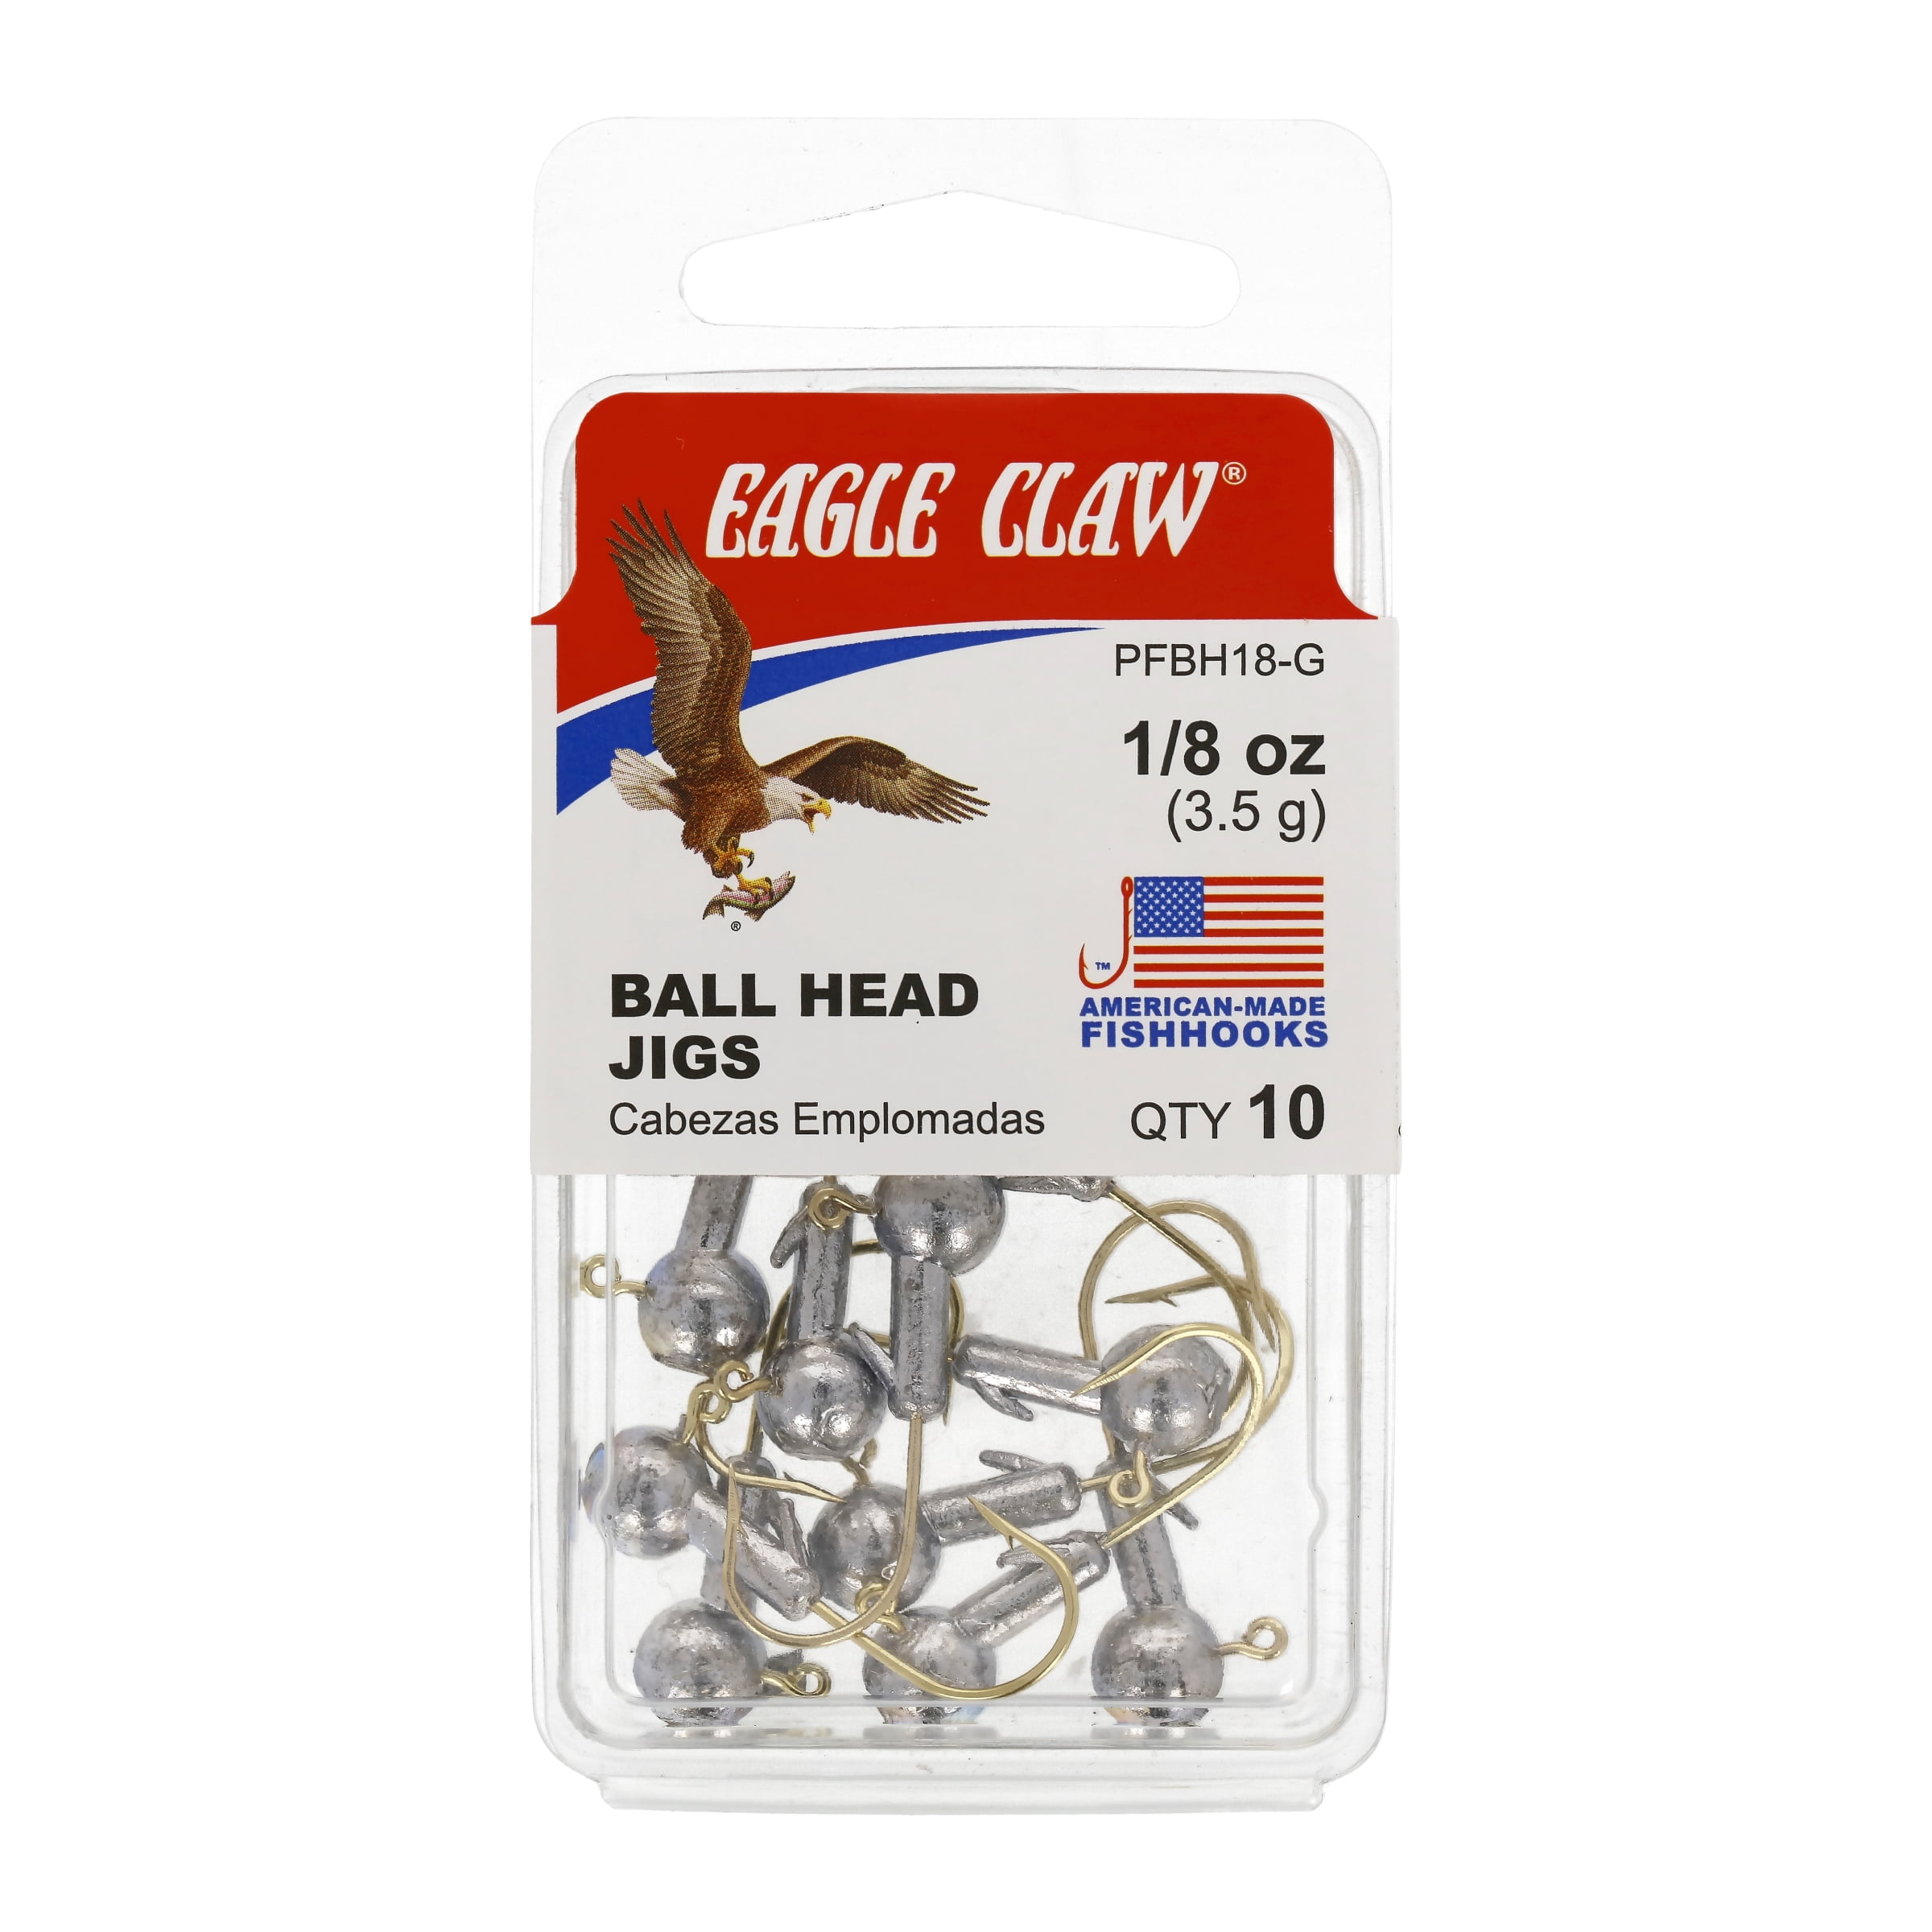 Eagle Claw Ball Head Fishing Jig, Unpainted, 1/32 oz.